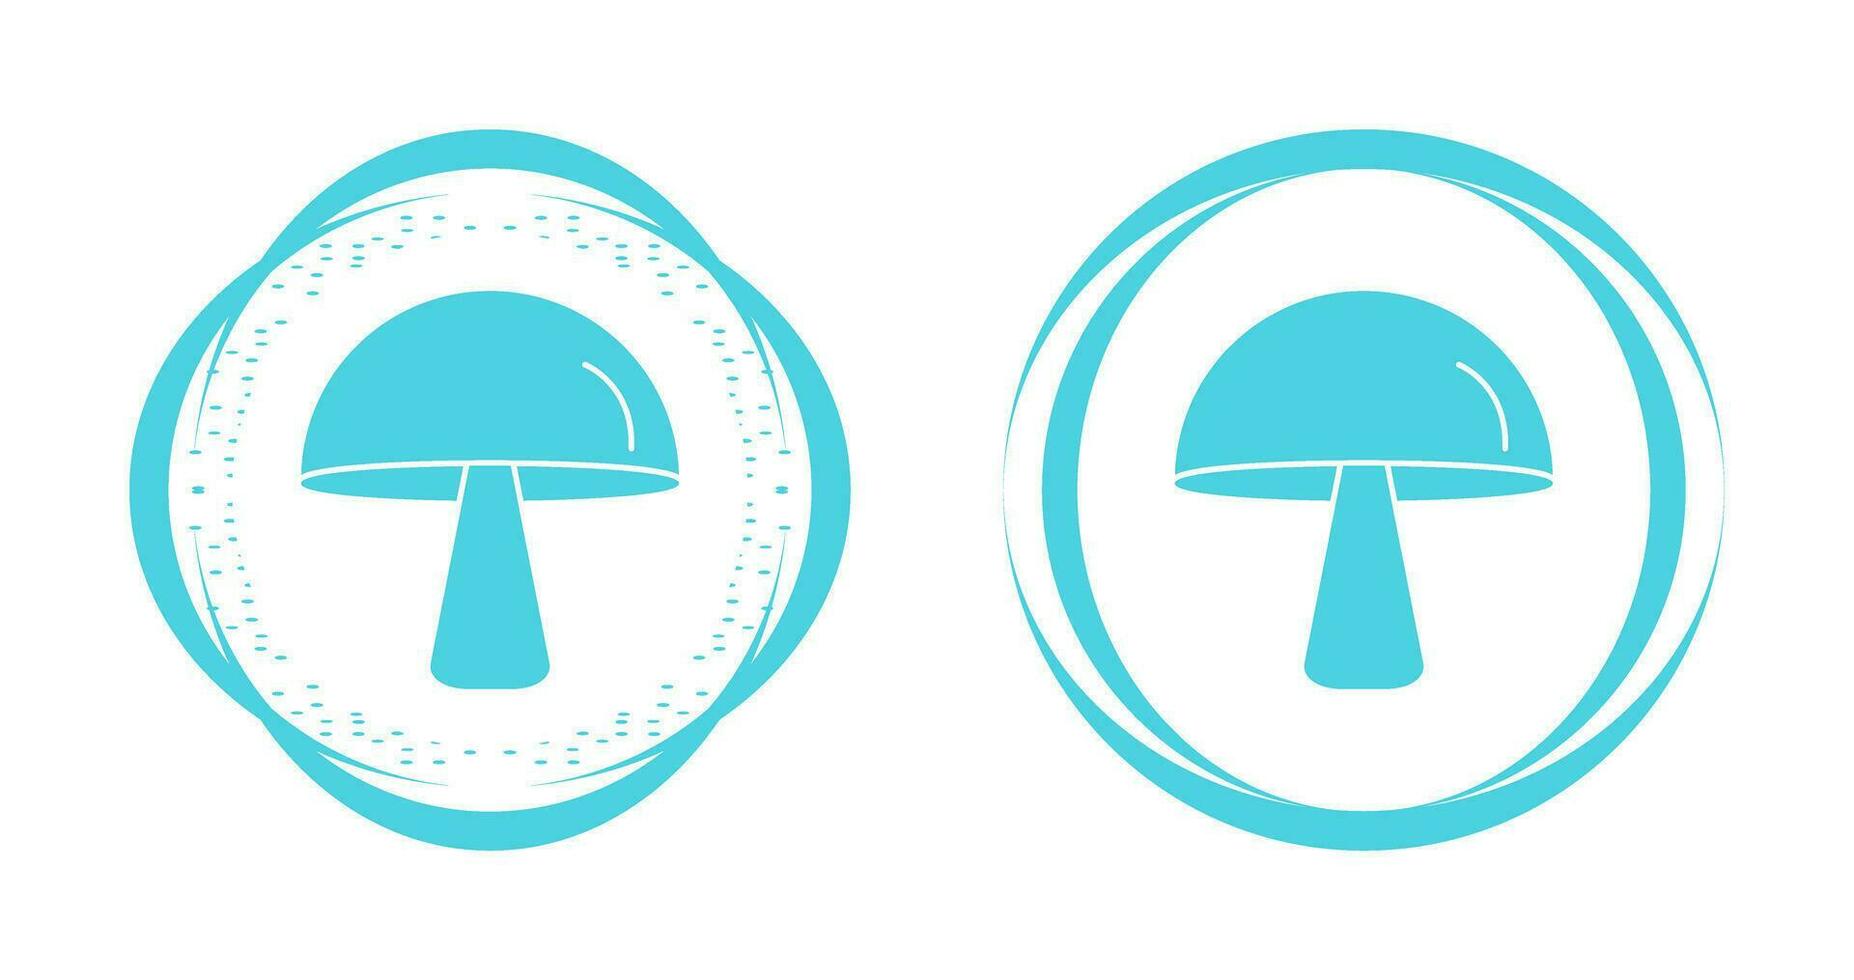 Single Mushroom Vector Icon